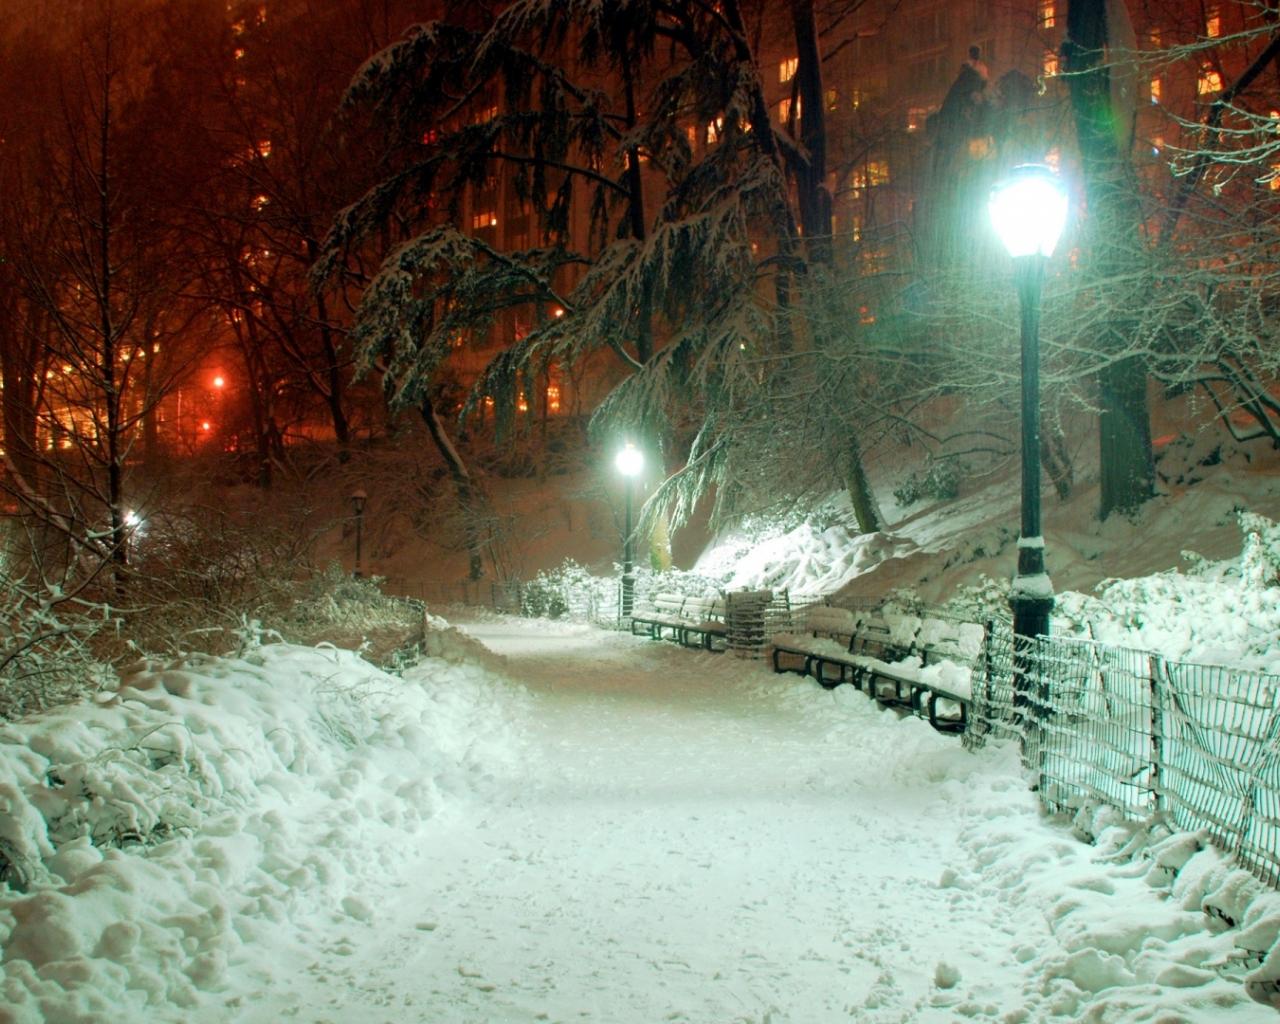 Free download Full HD Wallpaper central park winter lantern